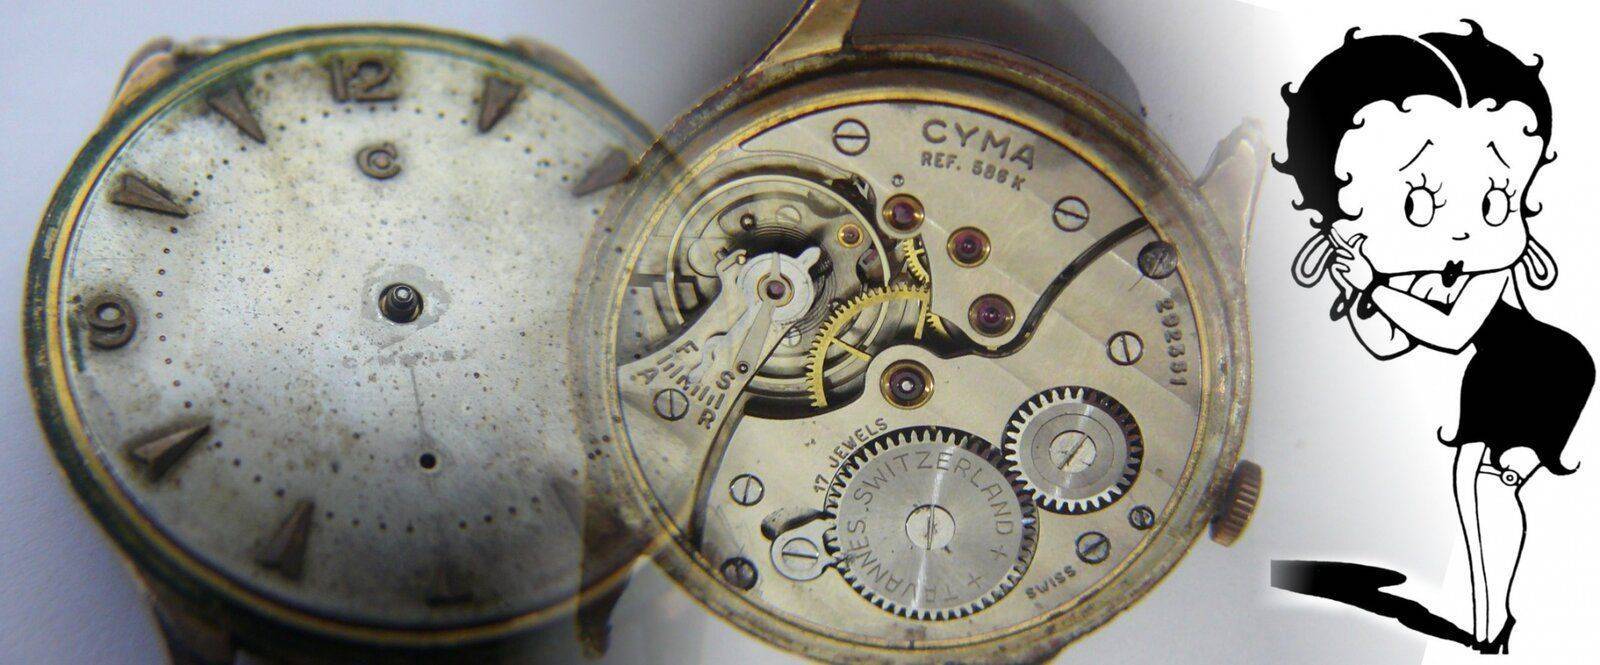 Betty-boop_Cyma-586K_la-relojeria-vintage-portada-2048x851.jpg